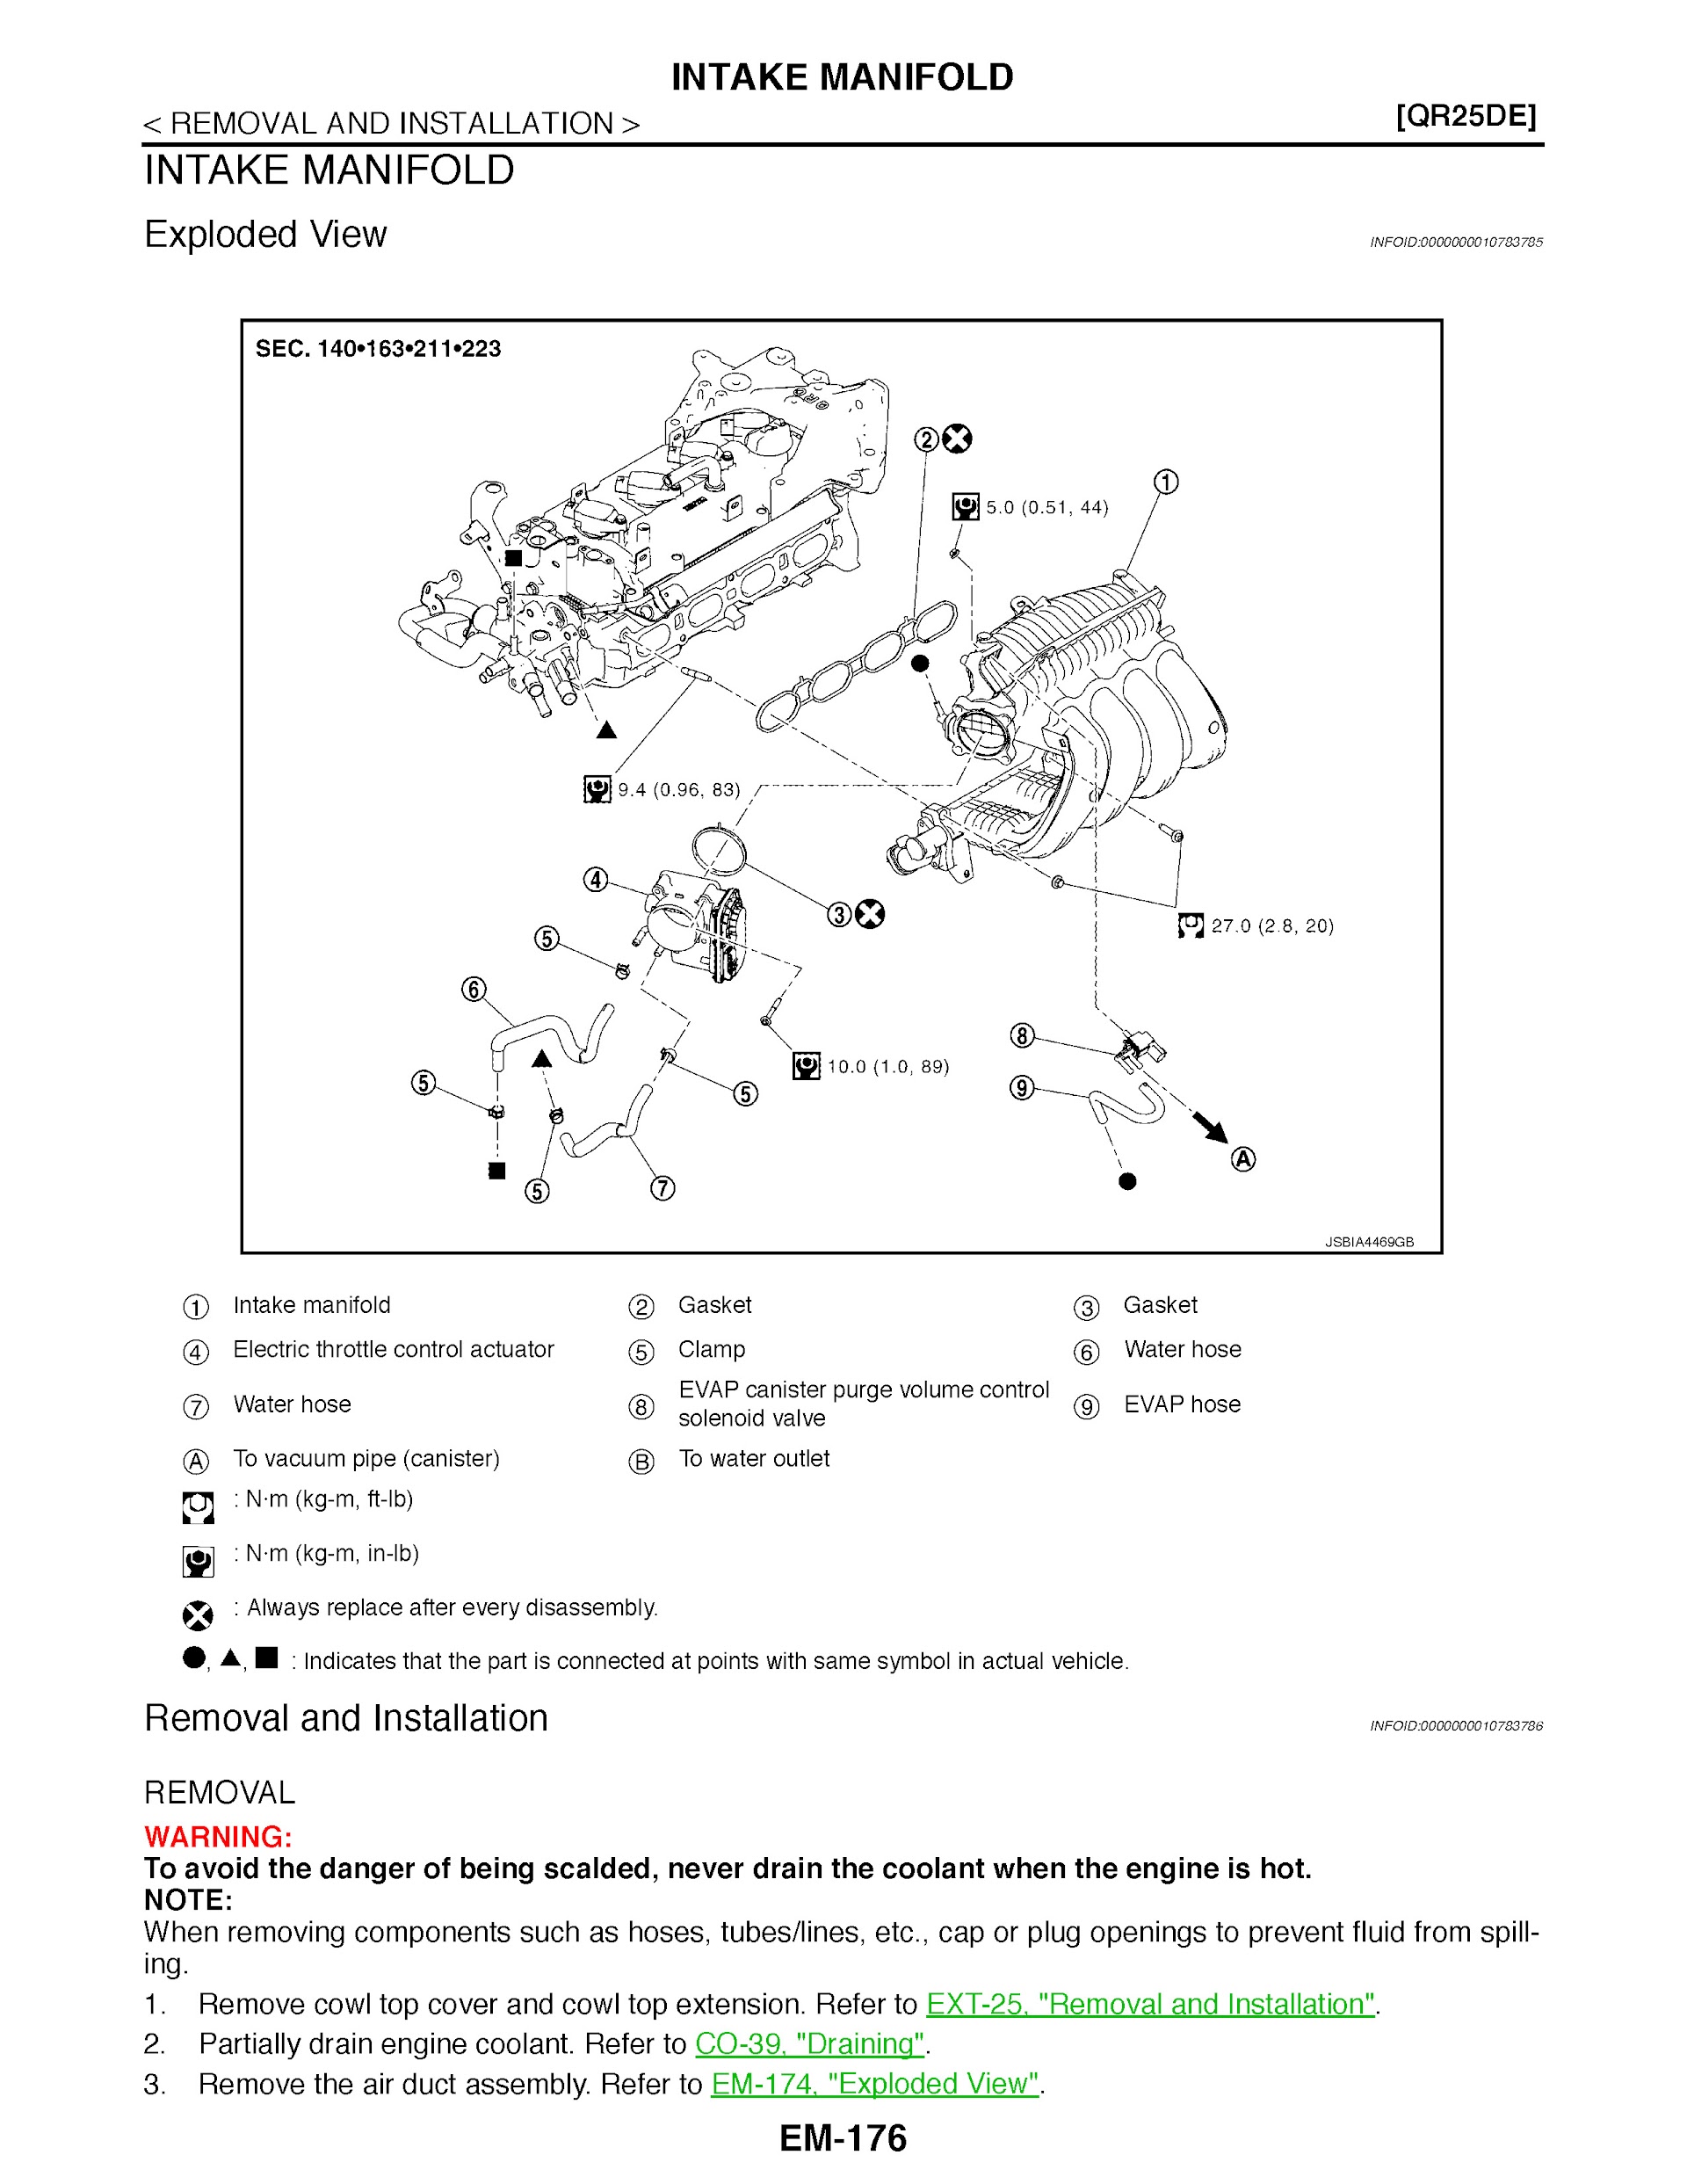 2020 Nissan X-Trail Repair Manual, Intake Manifold